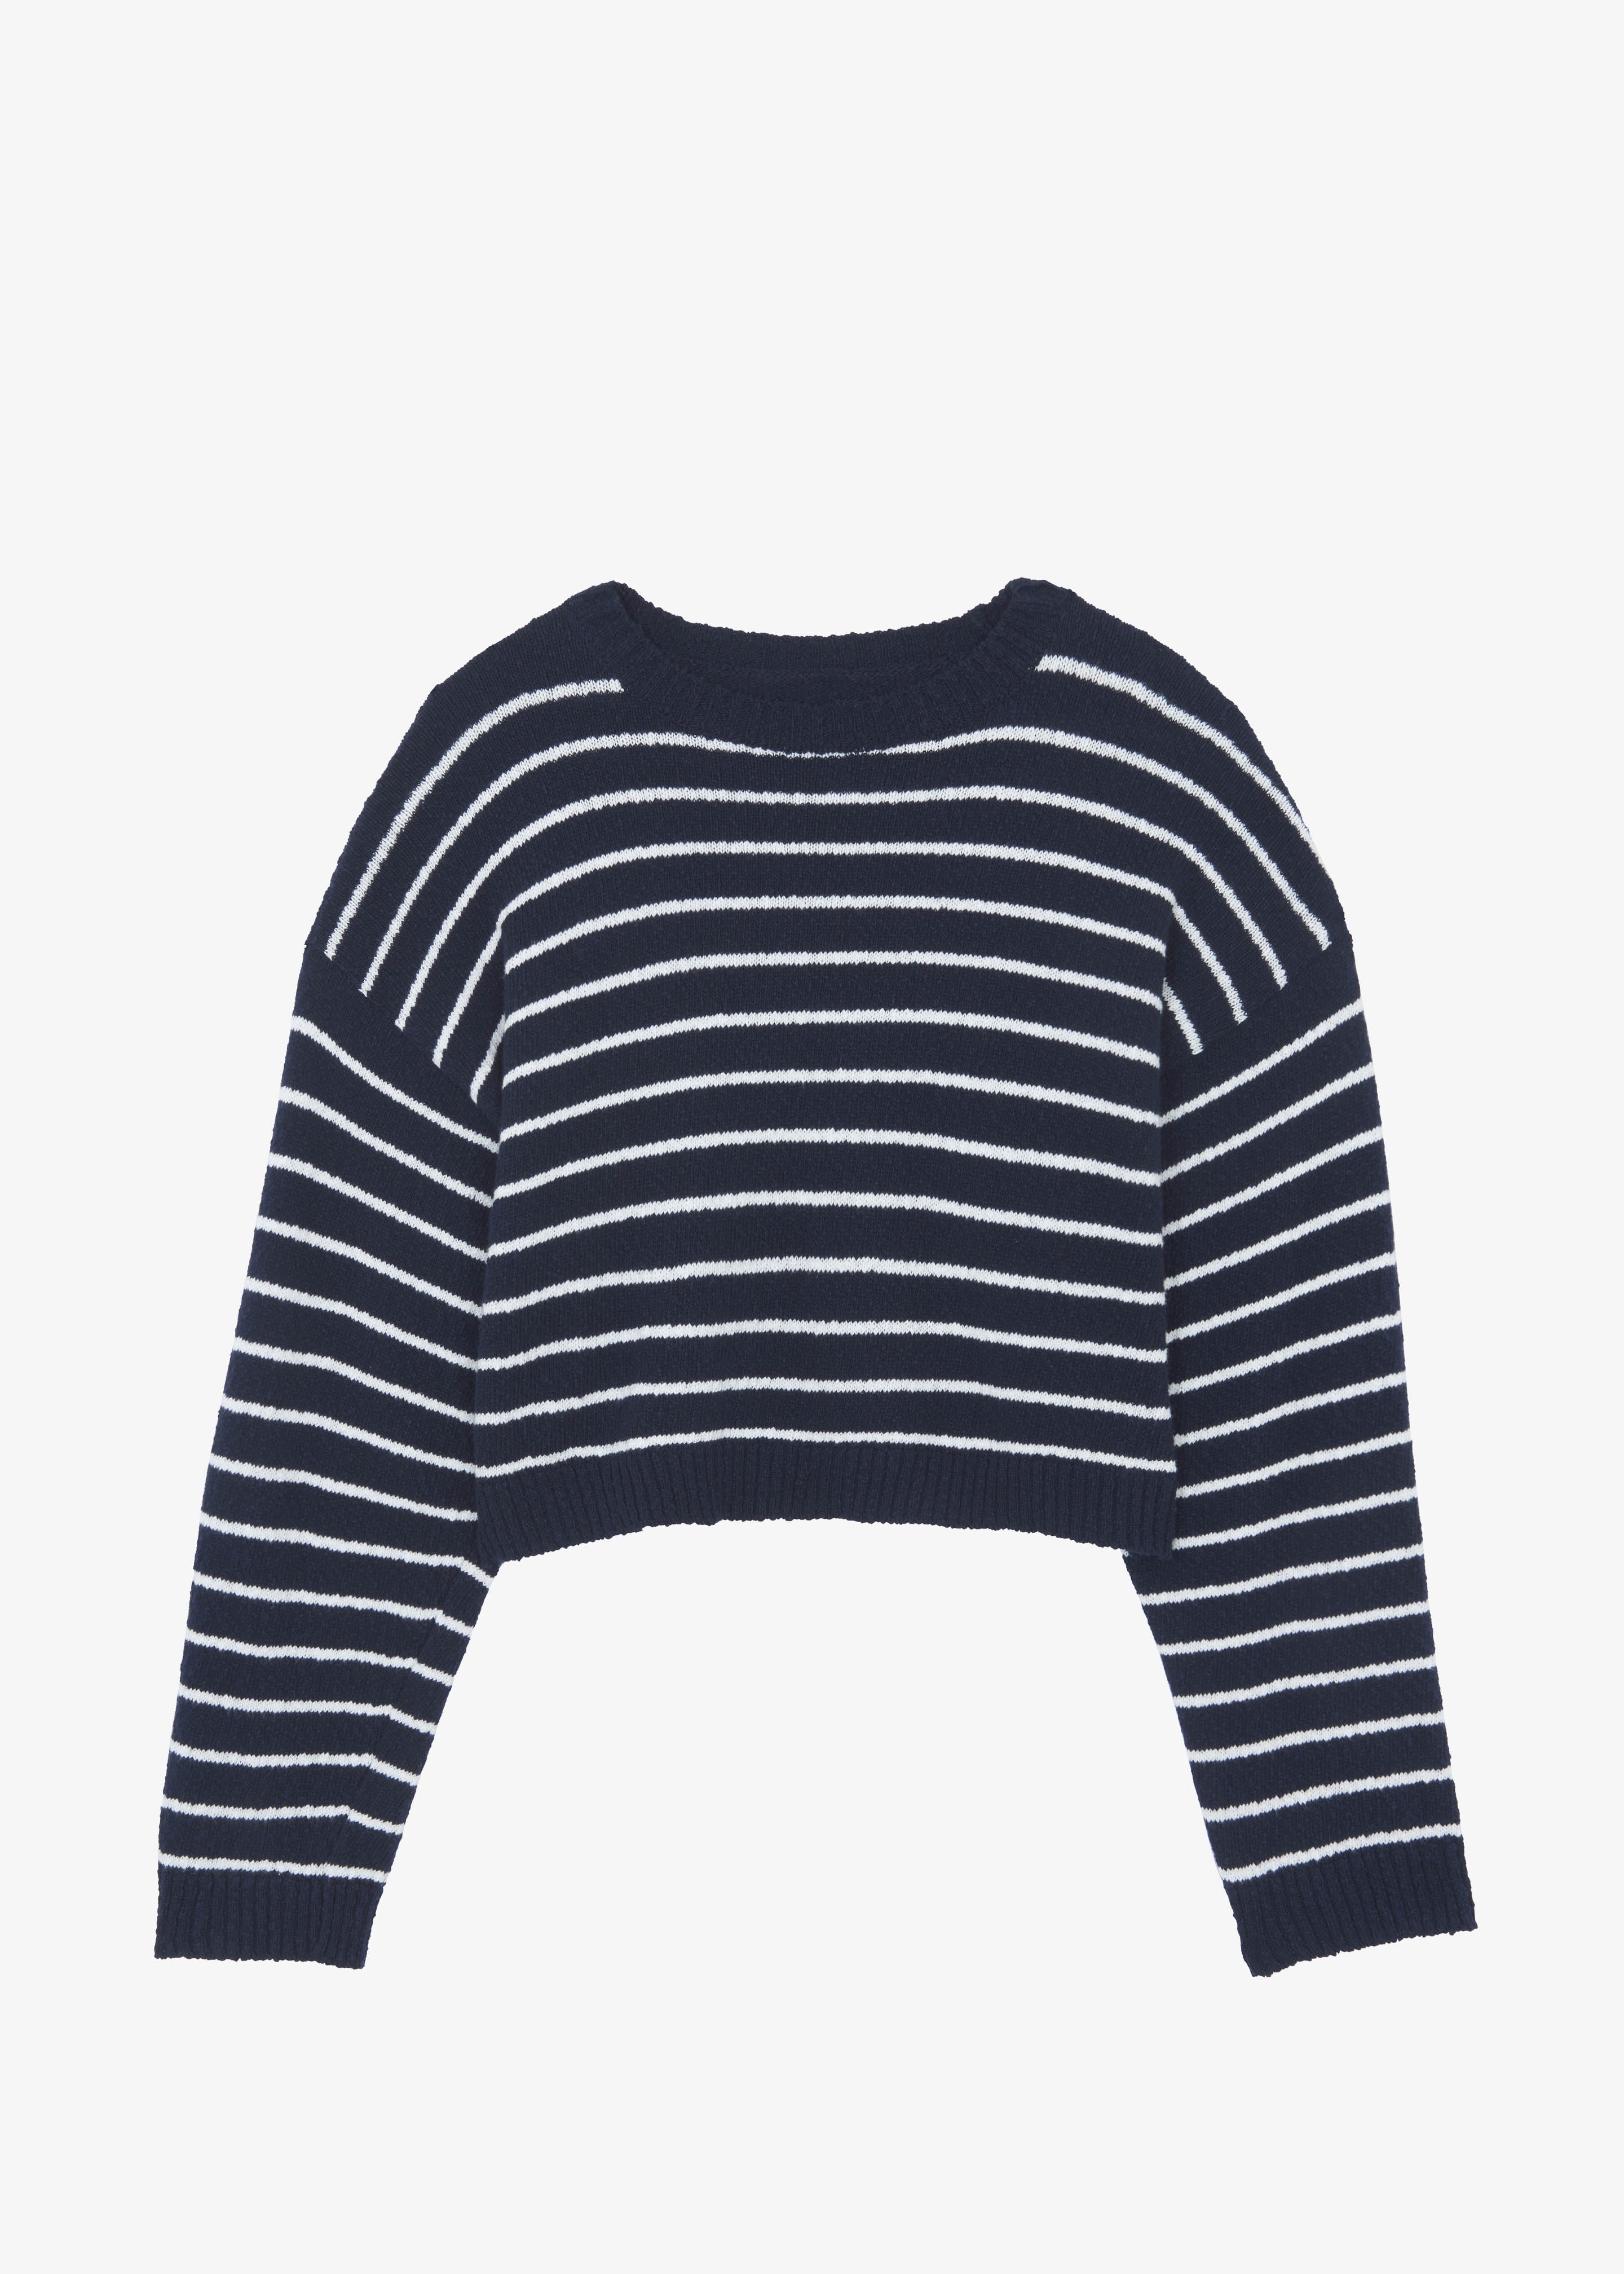 Iona Boatneck Navy Sweater - White Stripe - 8